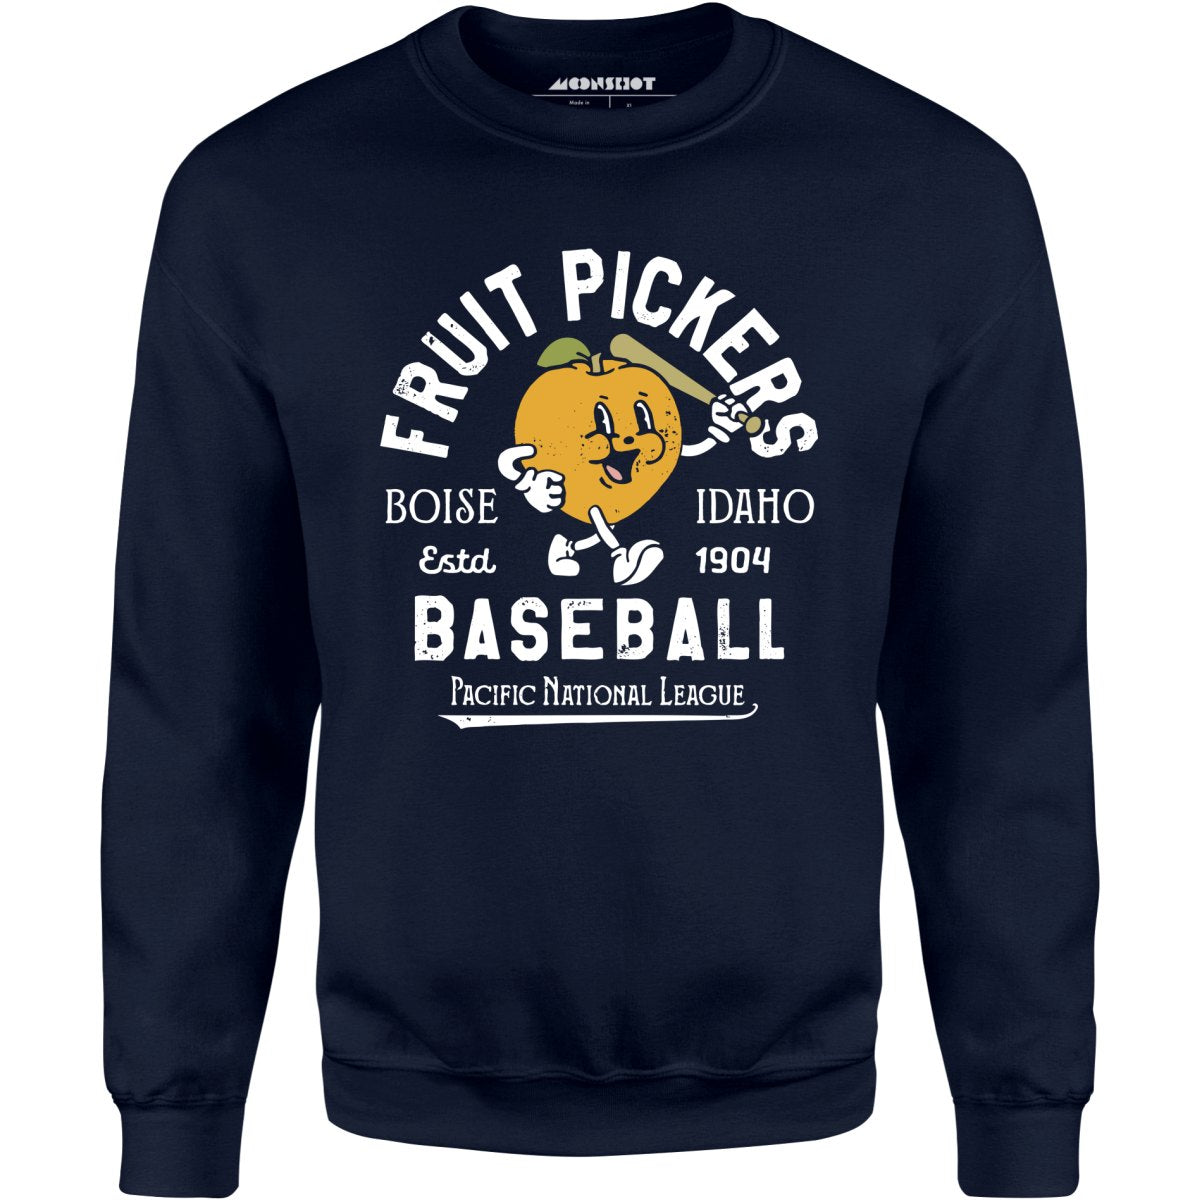 Boise Fruit Pickers - Idaho - Vintage Defunct Baseball Teams - Unisex Sweatshirt